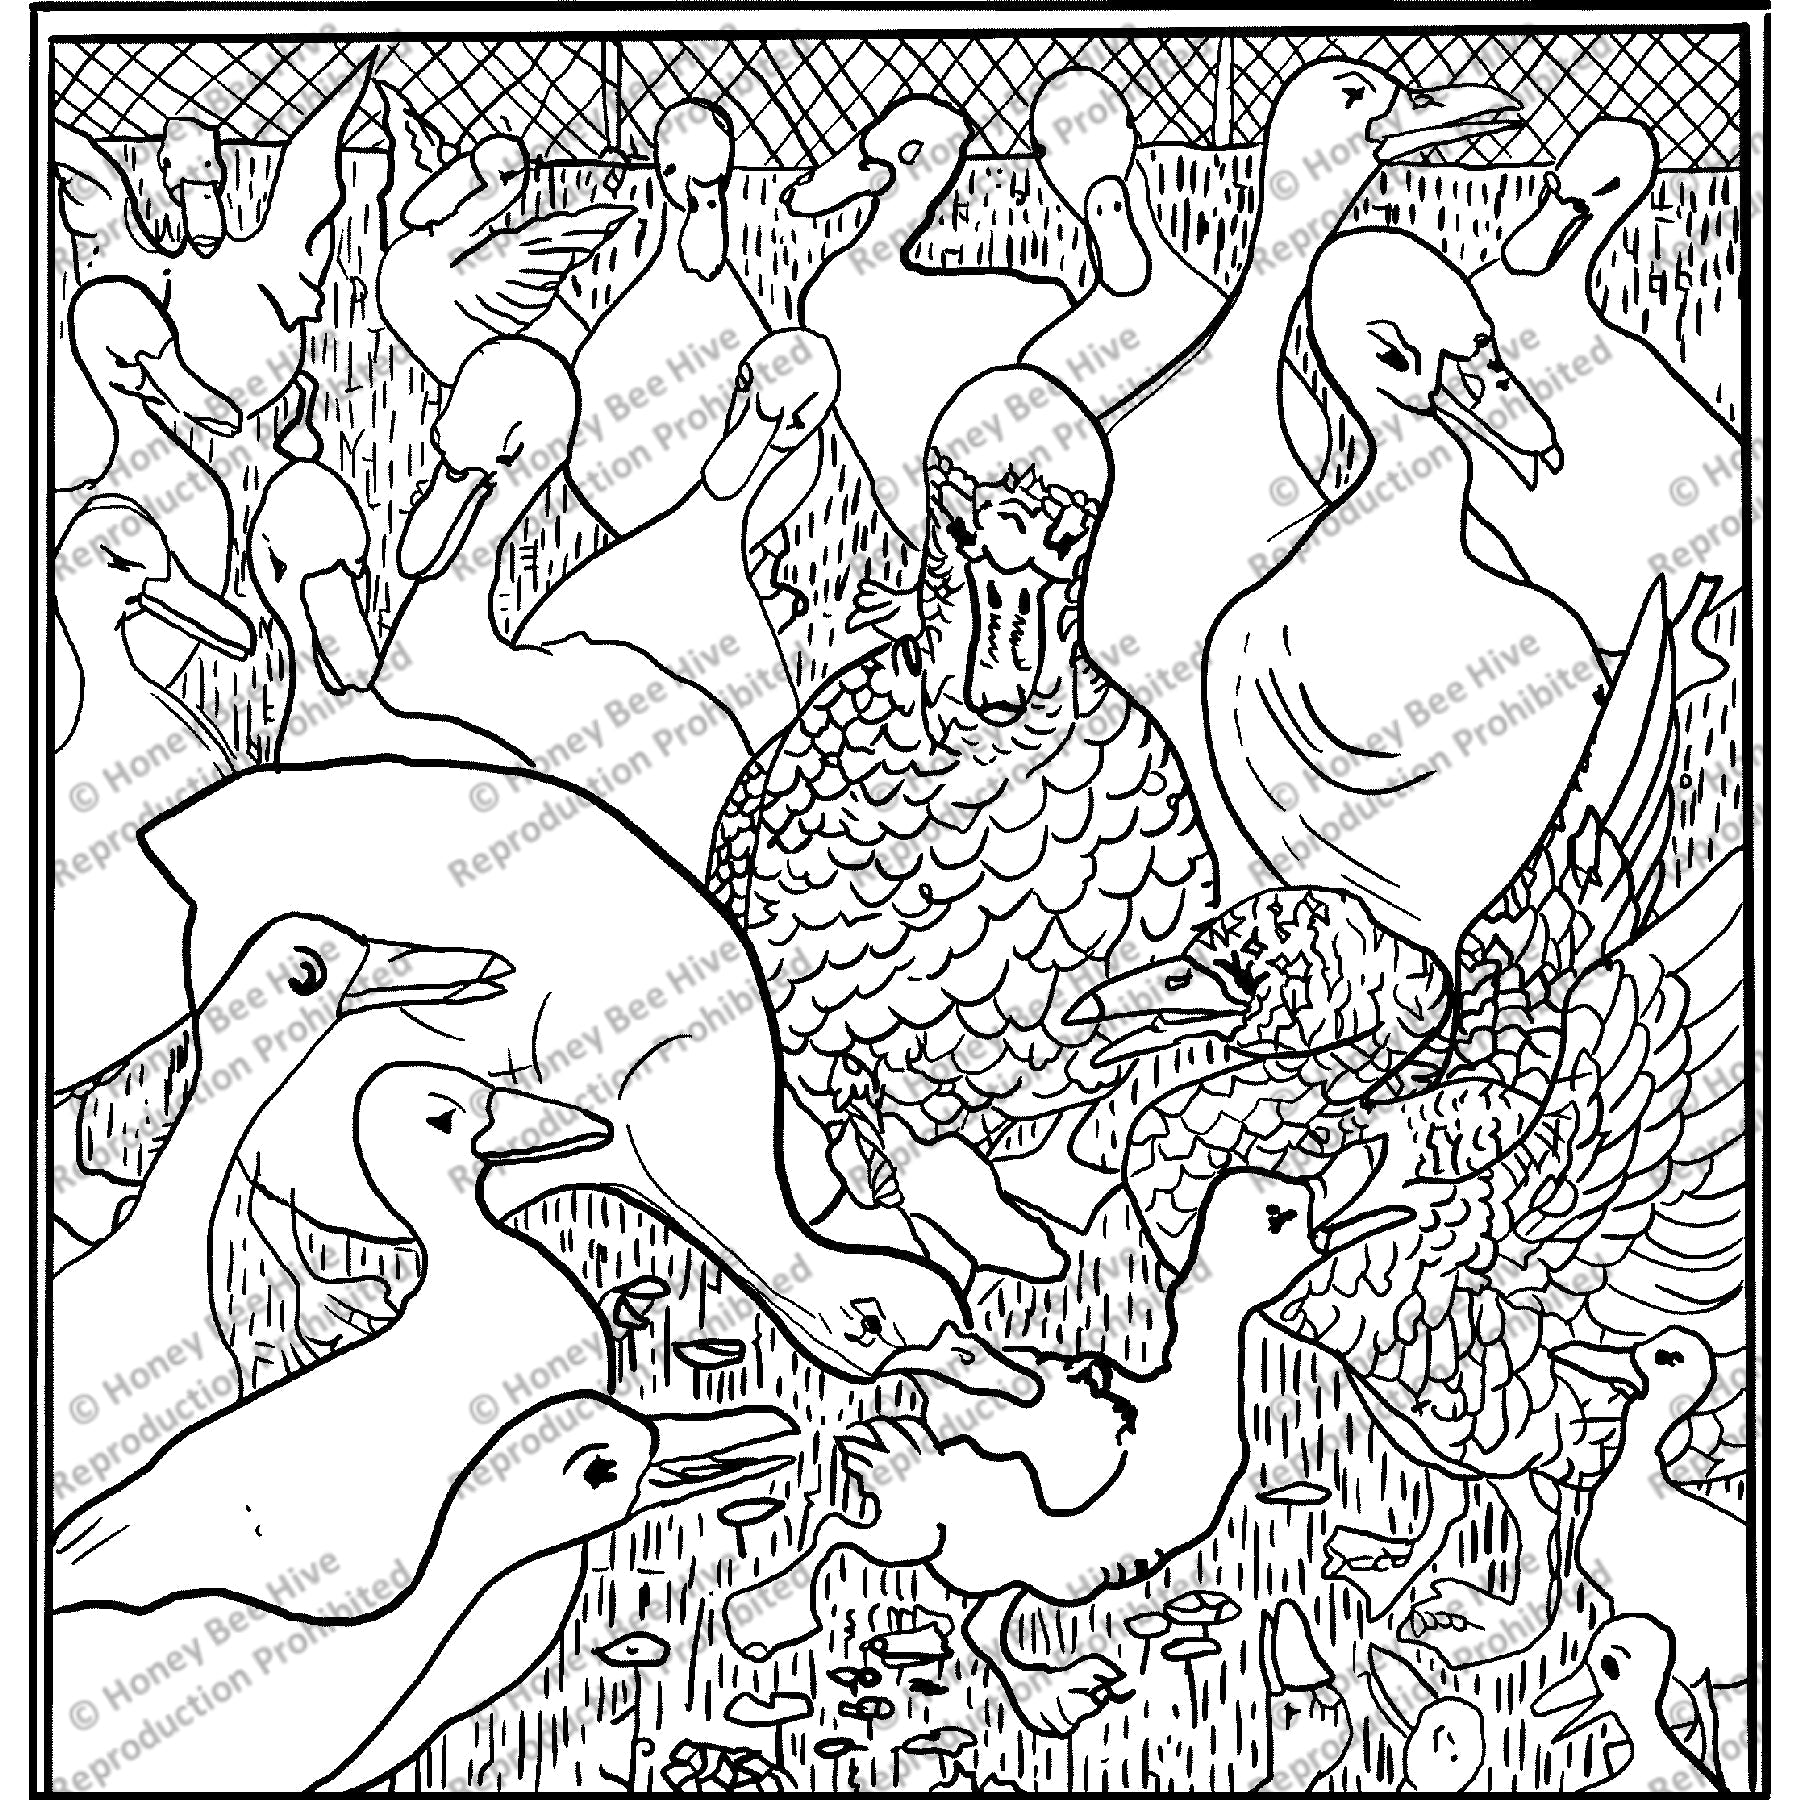 The Ugly Duckling, ill. Theodorus van Hoytema, 1894, rug hooking pattern